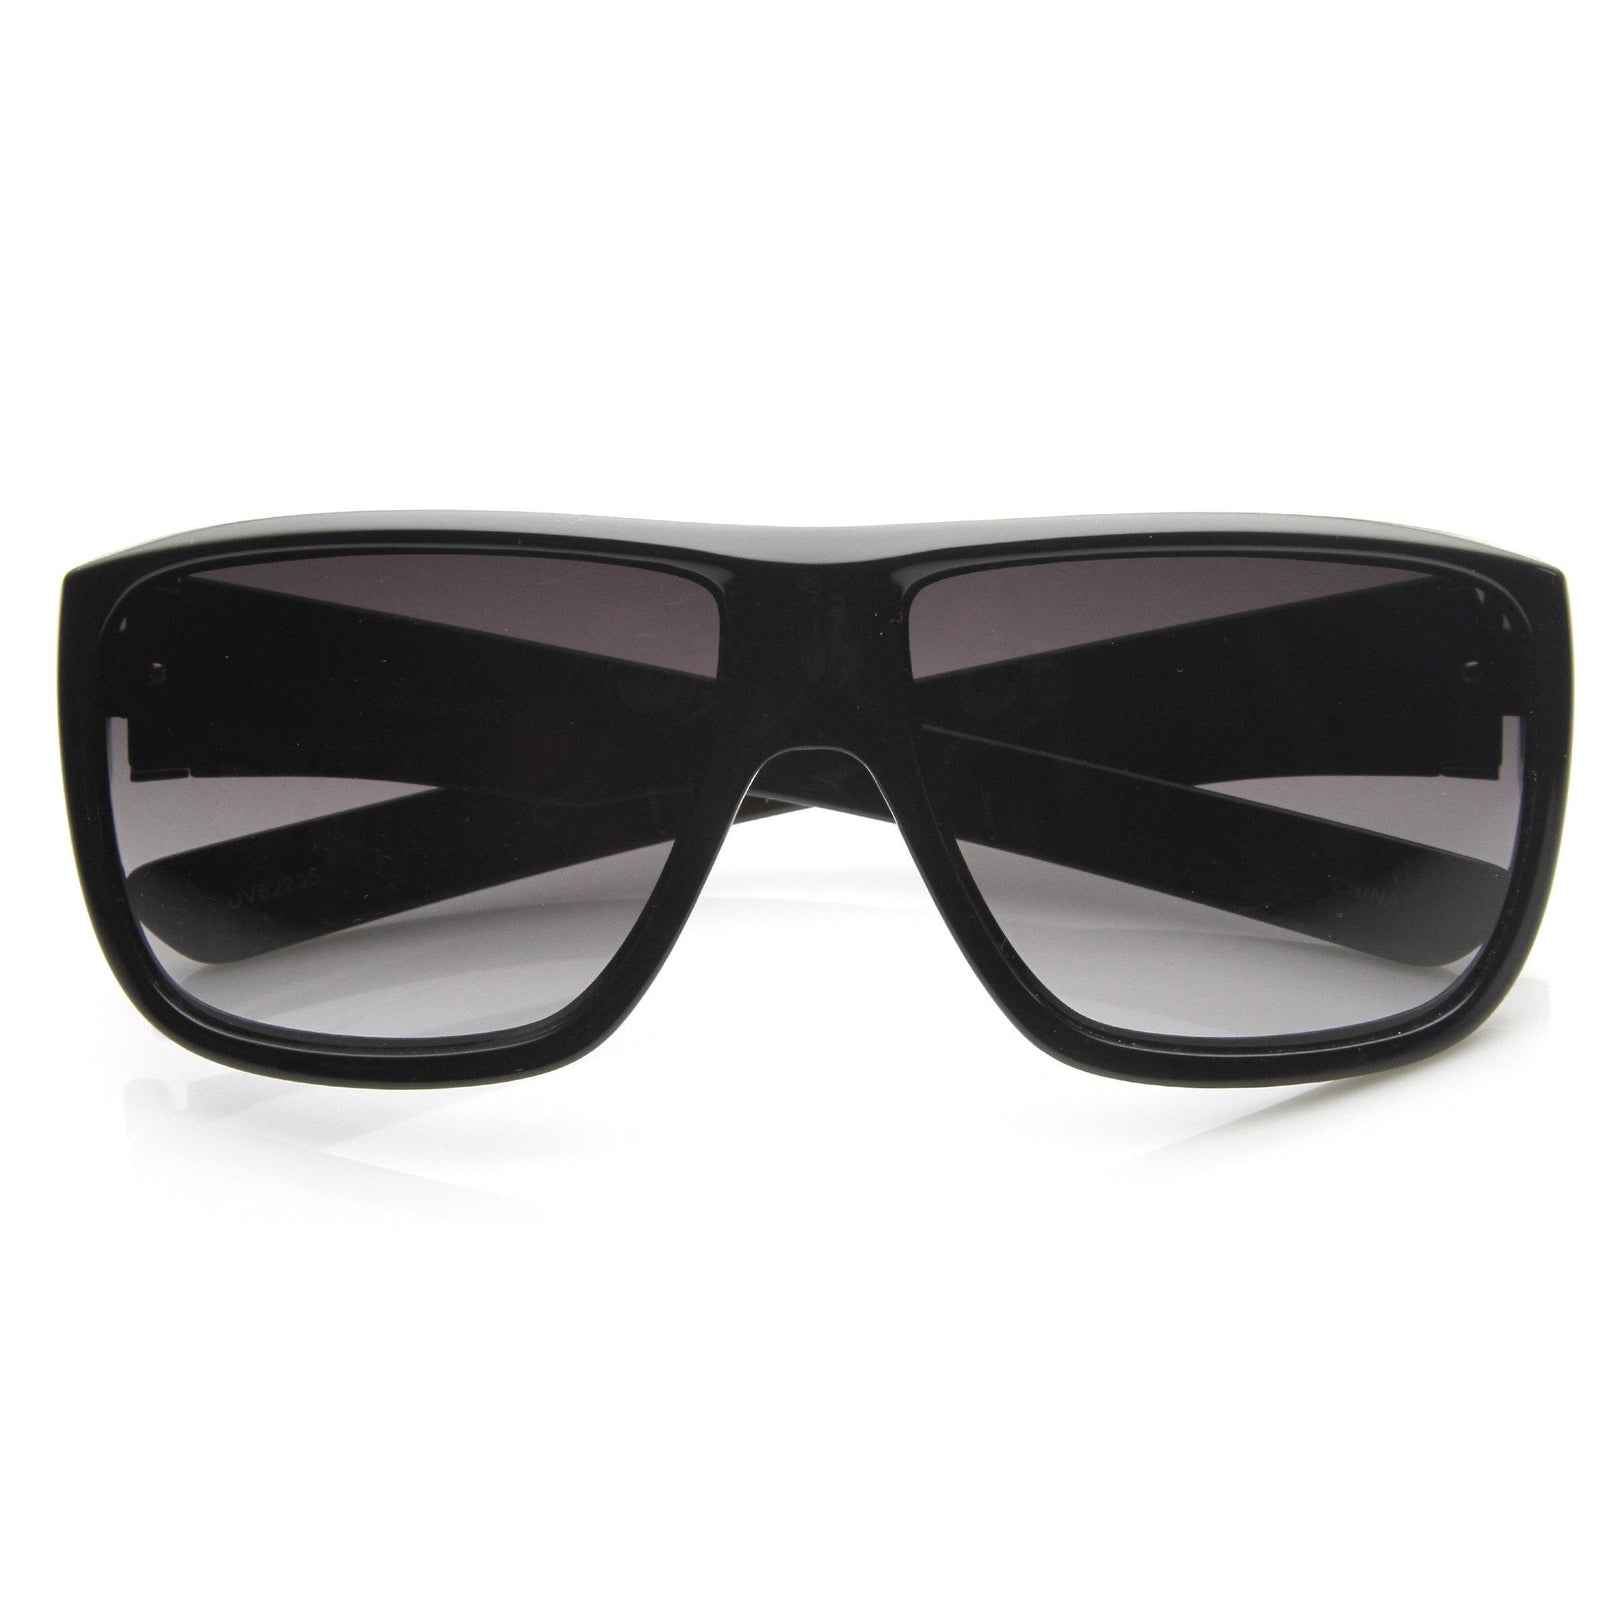 Wraparound Sunglasses for Men  zeroUV Eyewear Tagged aviator